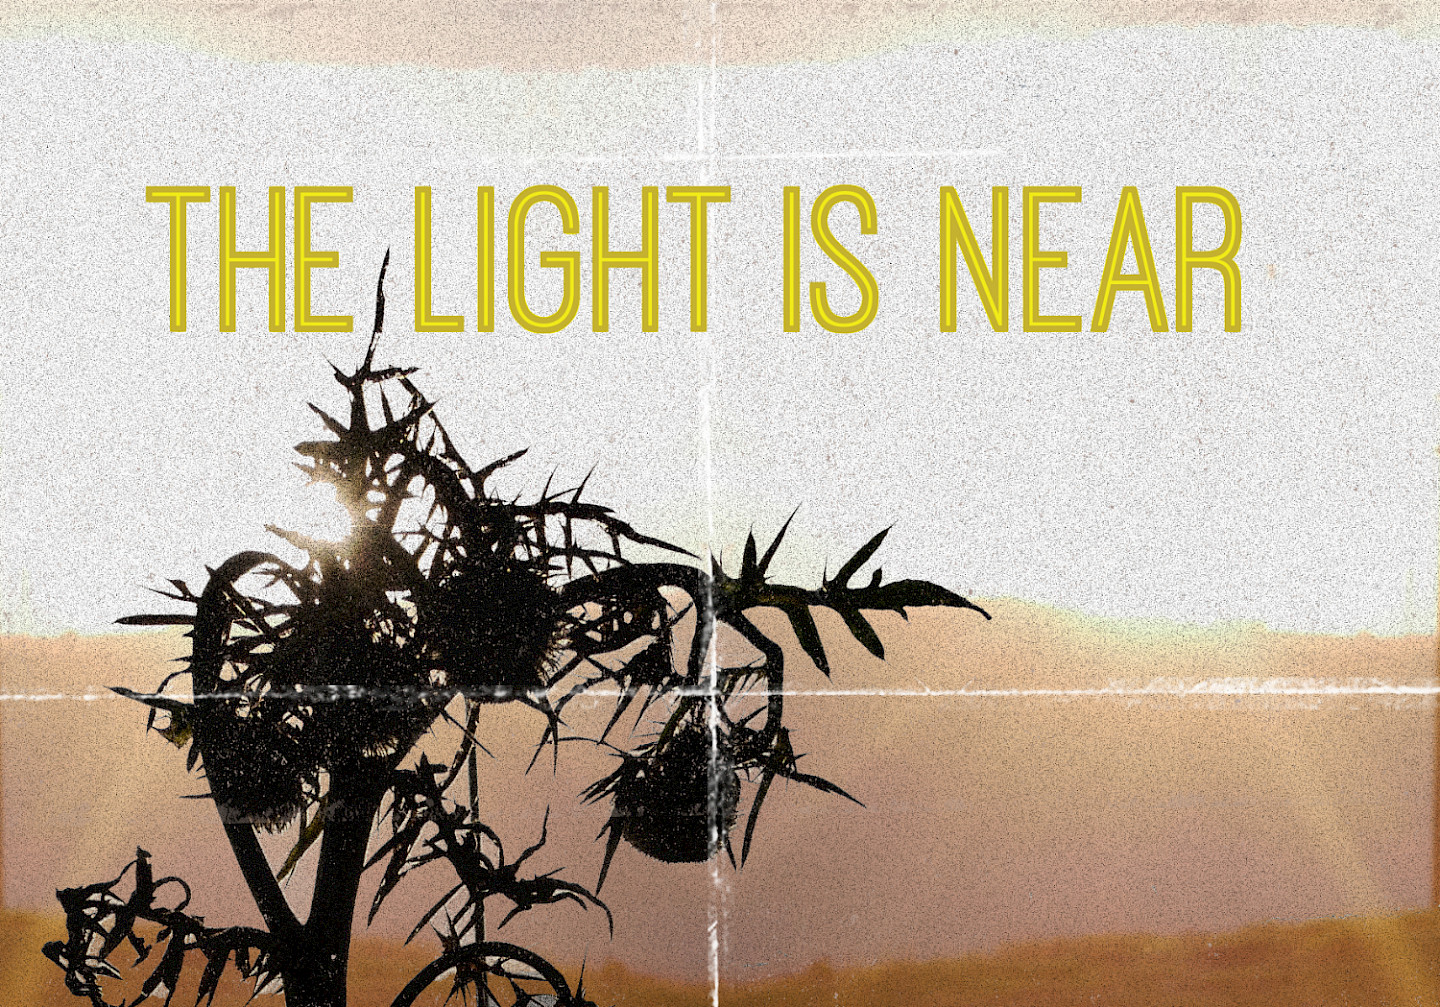 Christophe Lambert: THE LIGHT IS NEAR